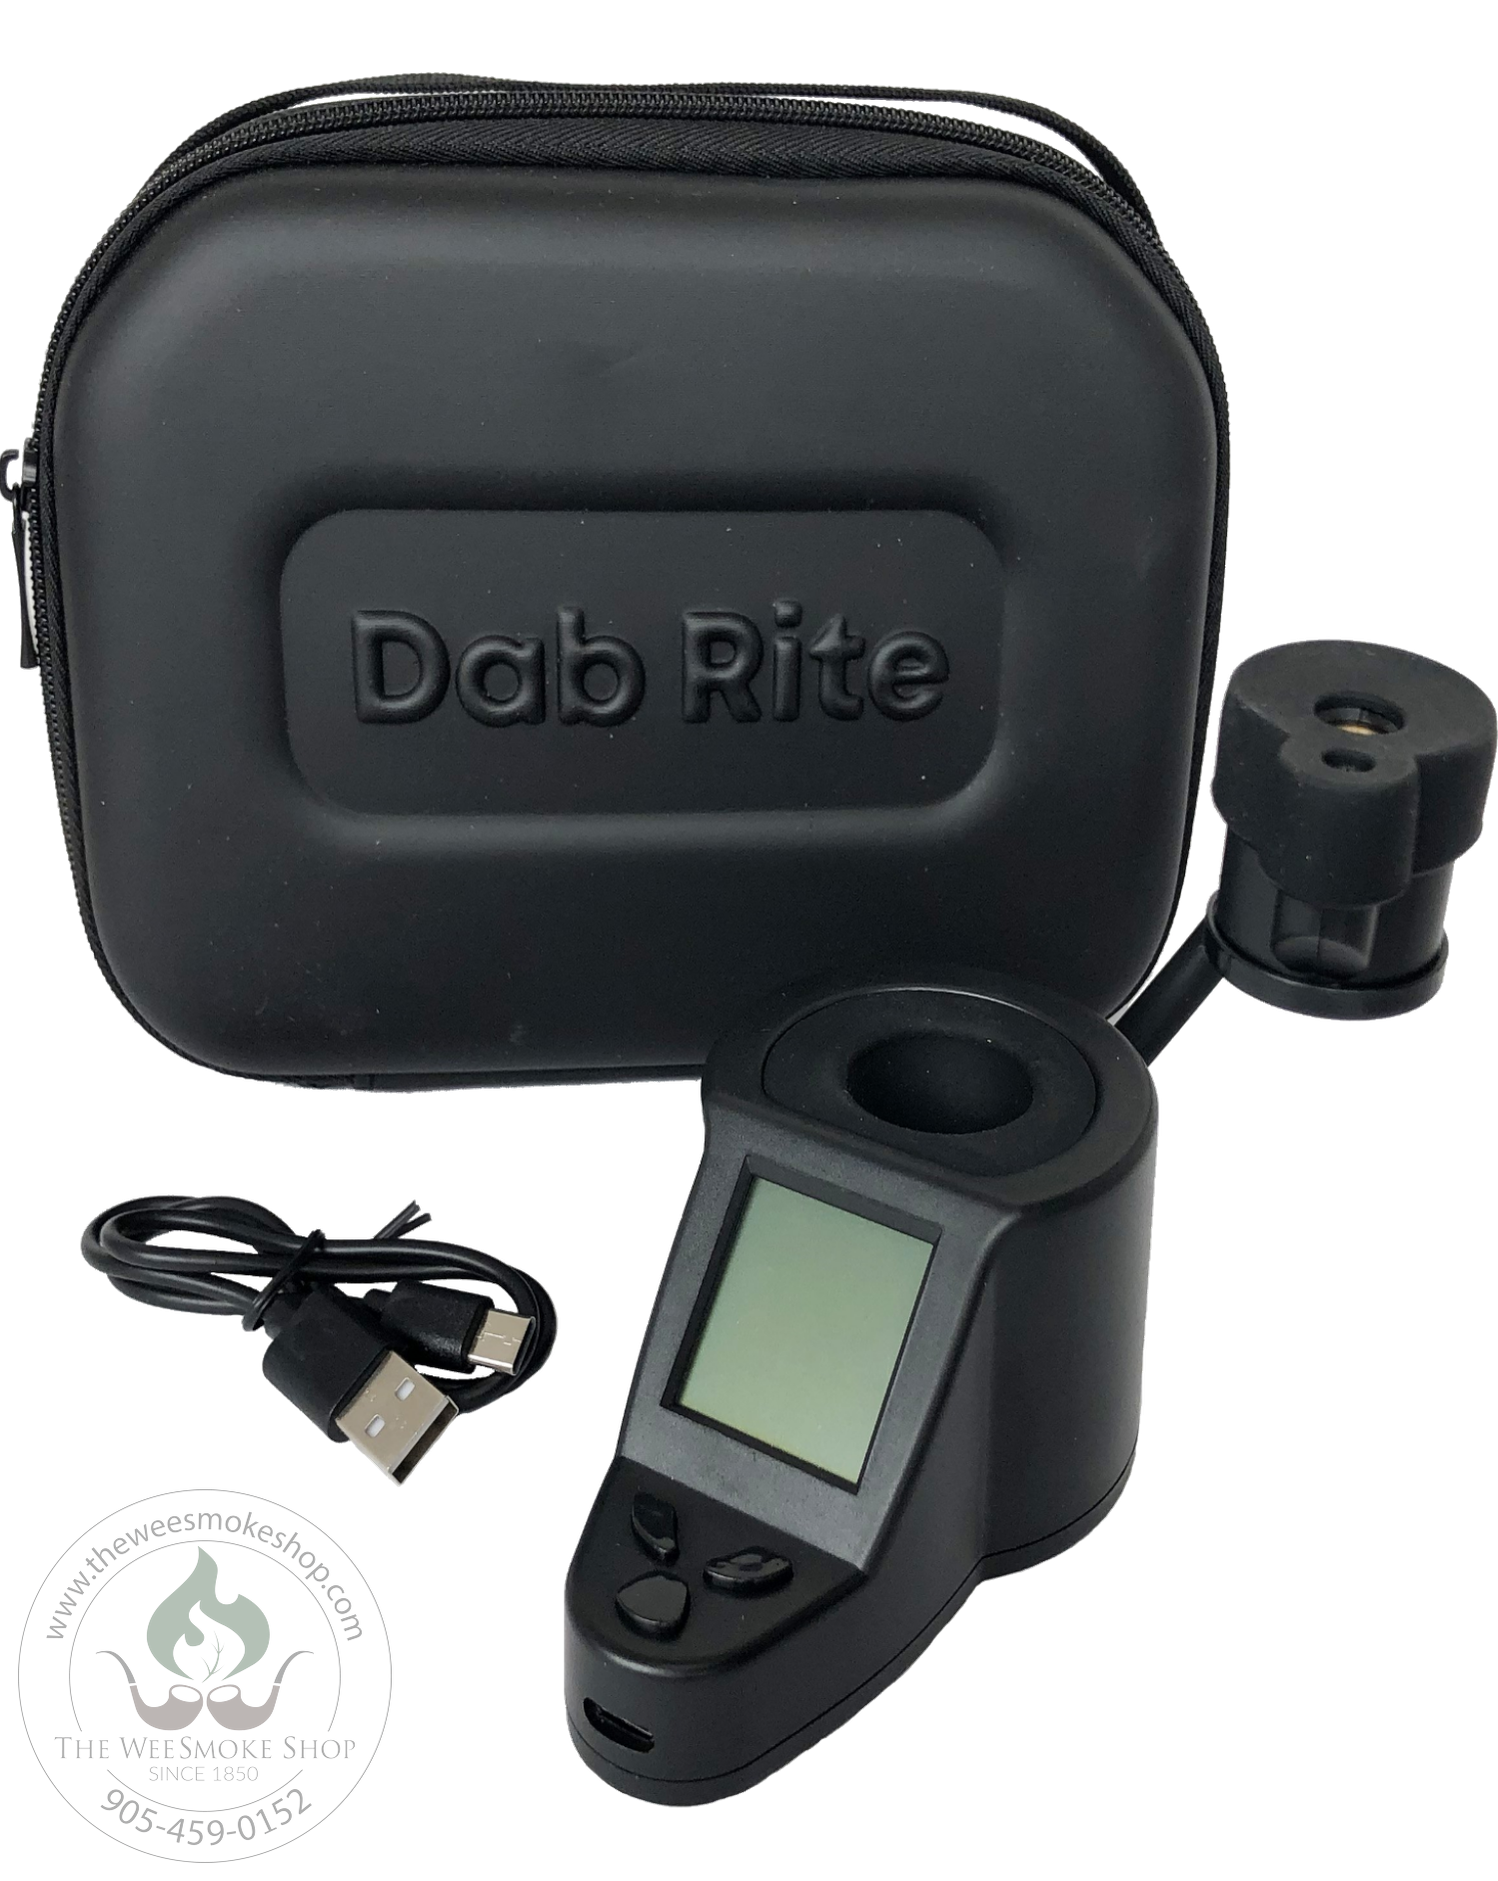 Black Dab Rite Digital IR Thermometer -  Wee Smoke Shop